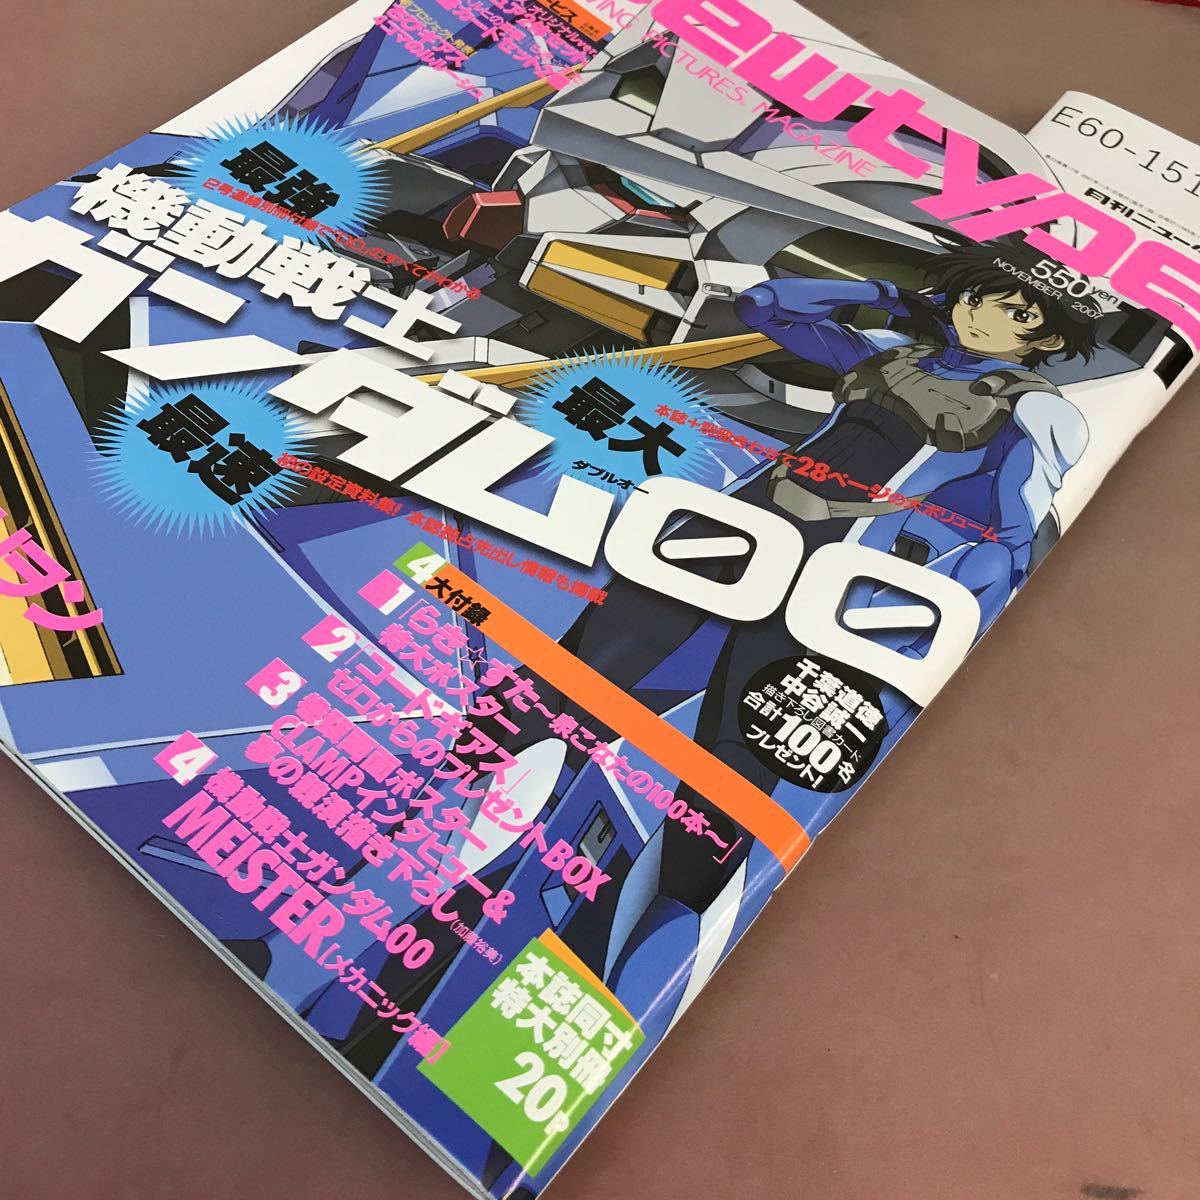 E60-151 monthly NewType 2007.11 Kadokawa Shoten Mobile Suit Gundam 00 Second season Evangelion other appendix attaching 